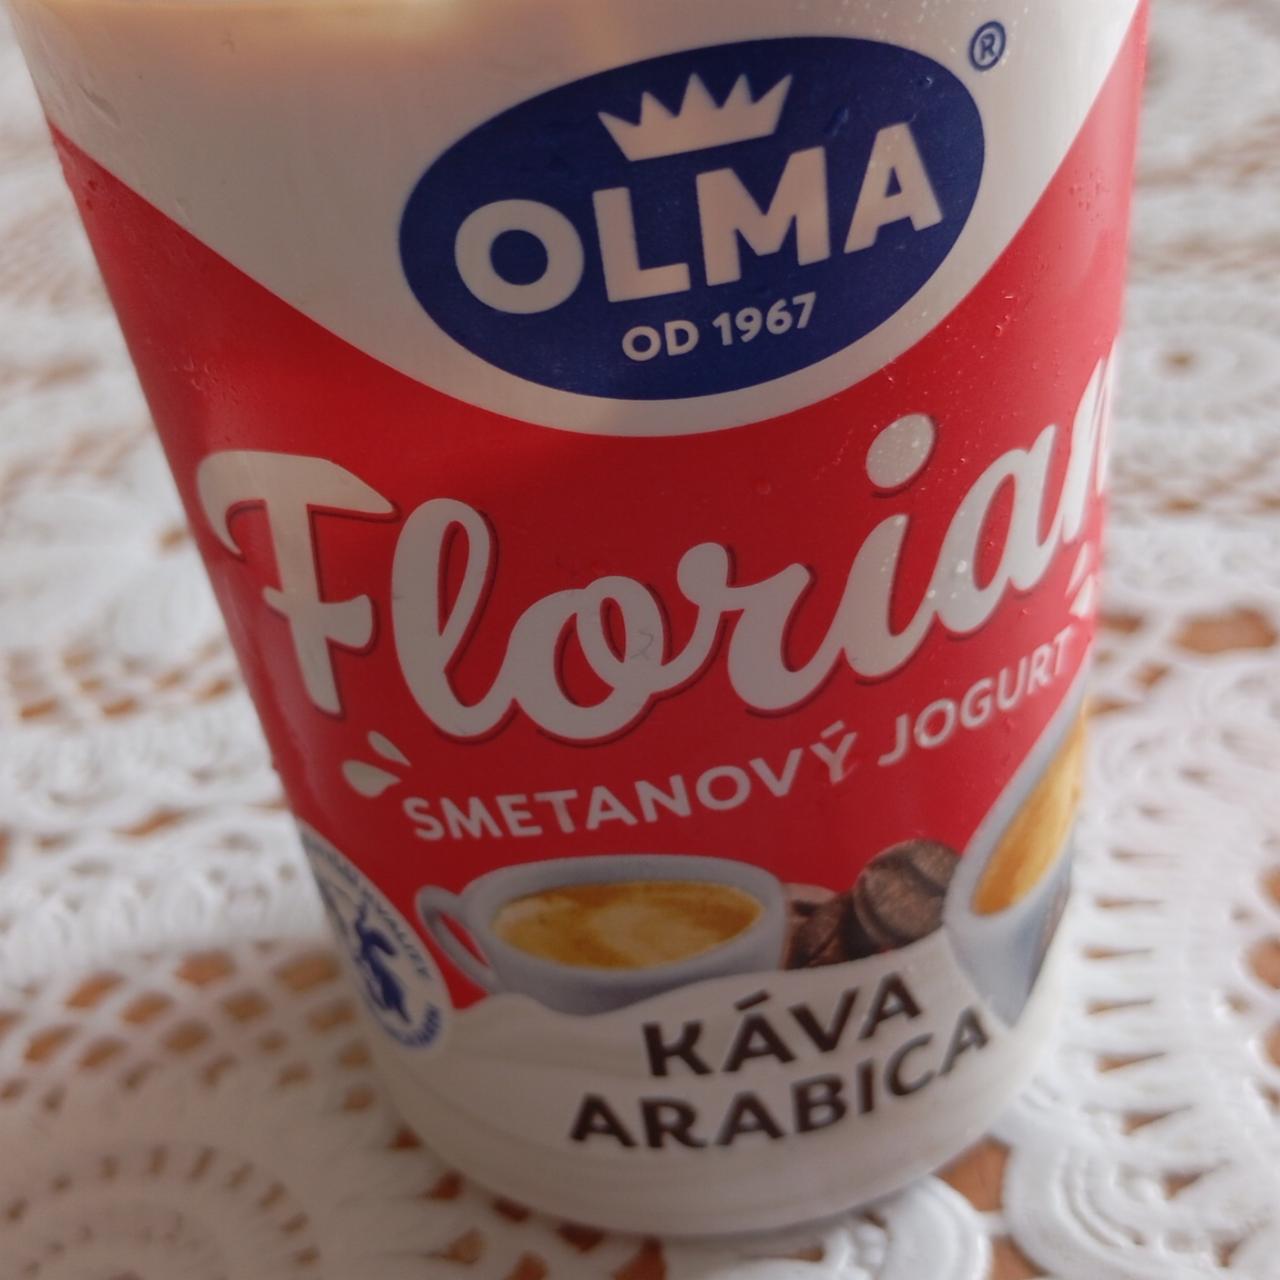 Фото - Florian smetanový jogurt káva arabica Olma